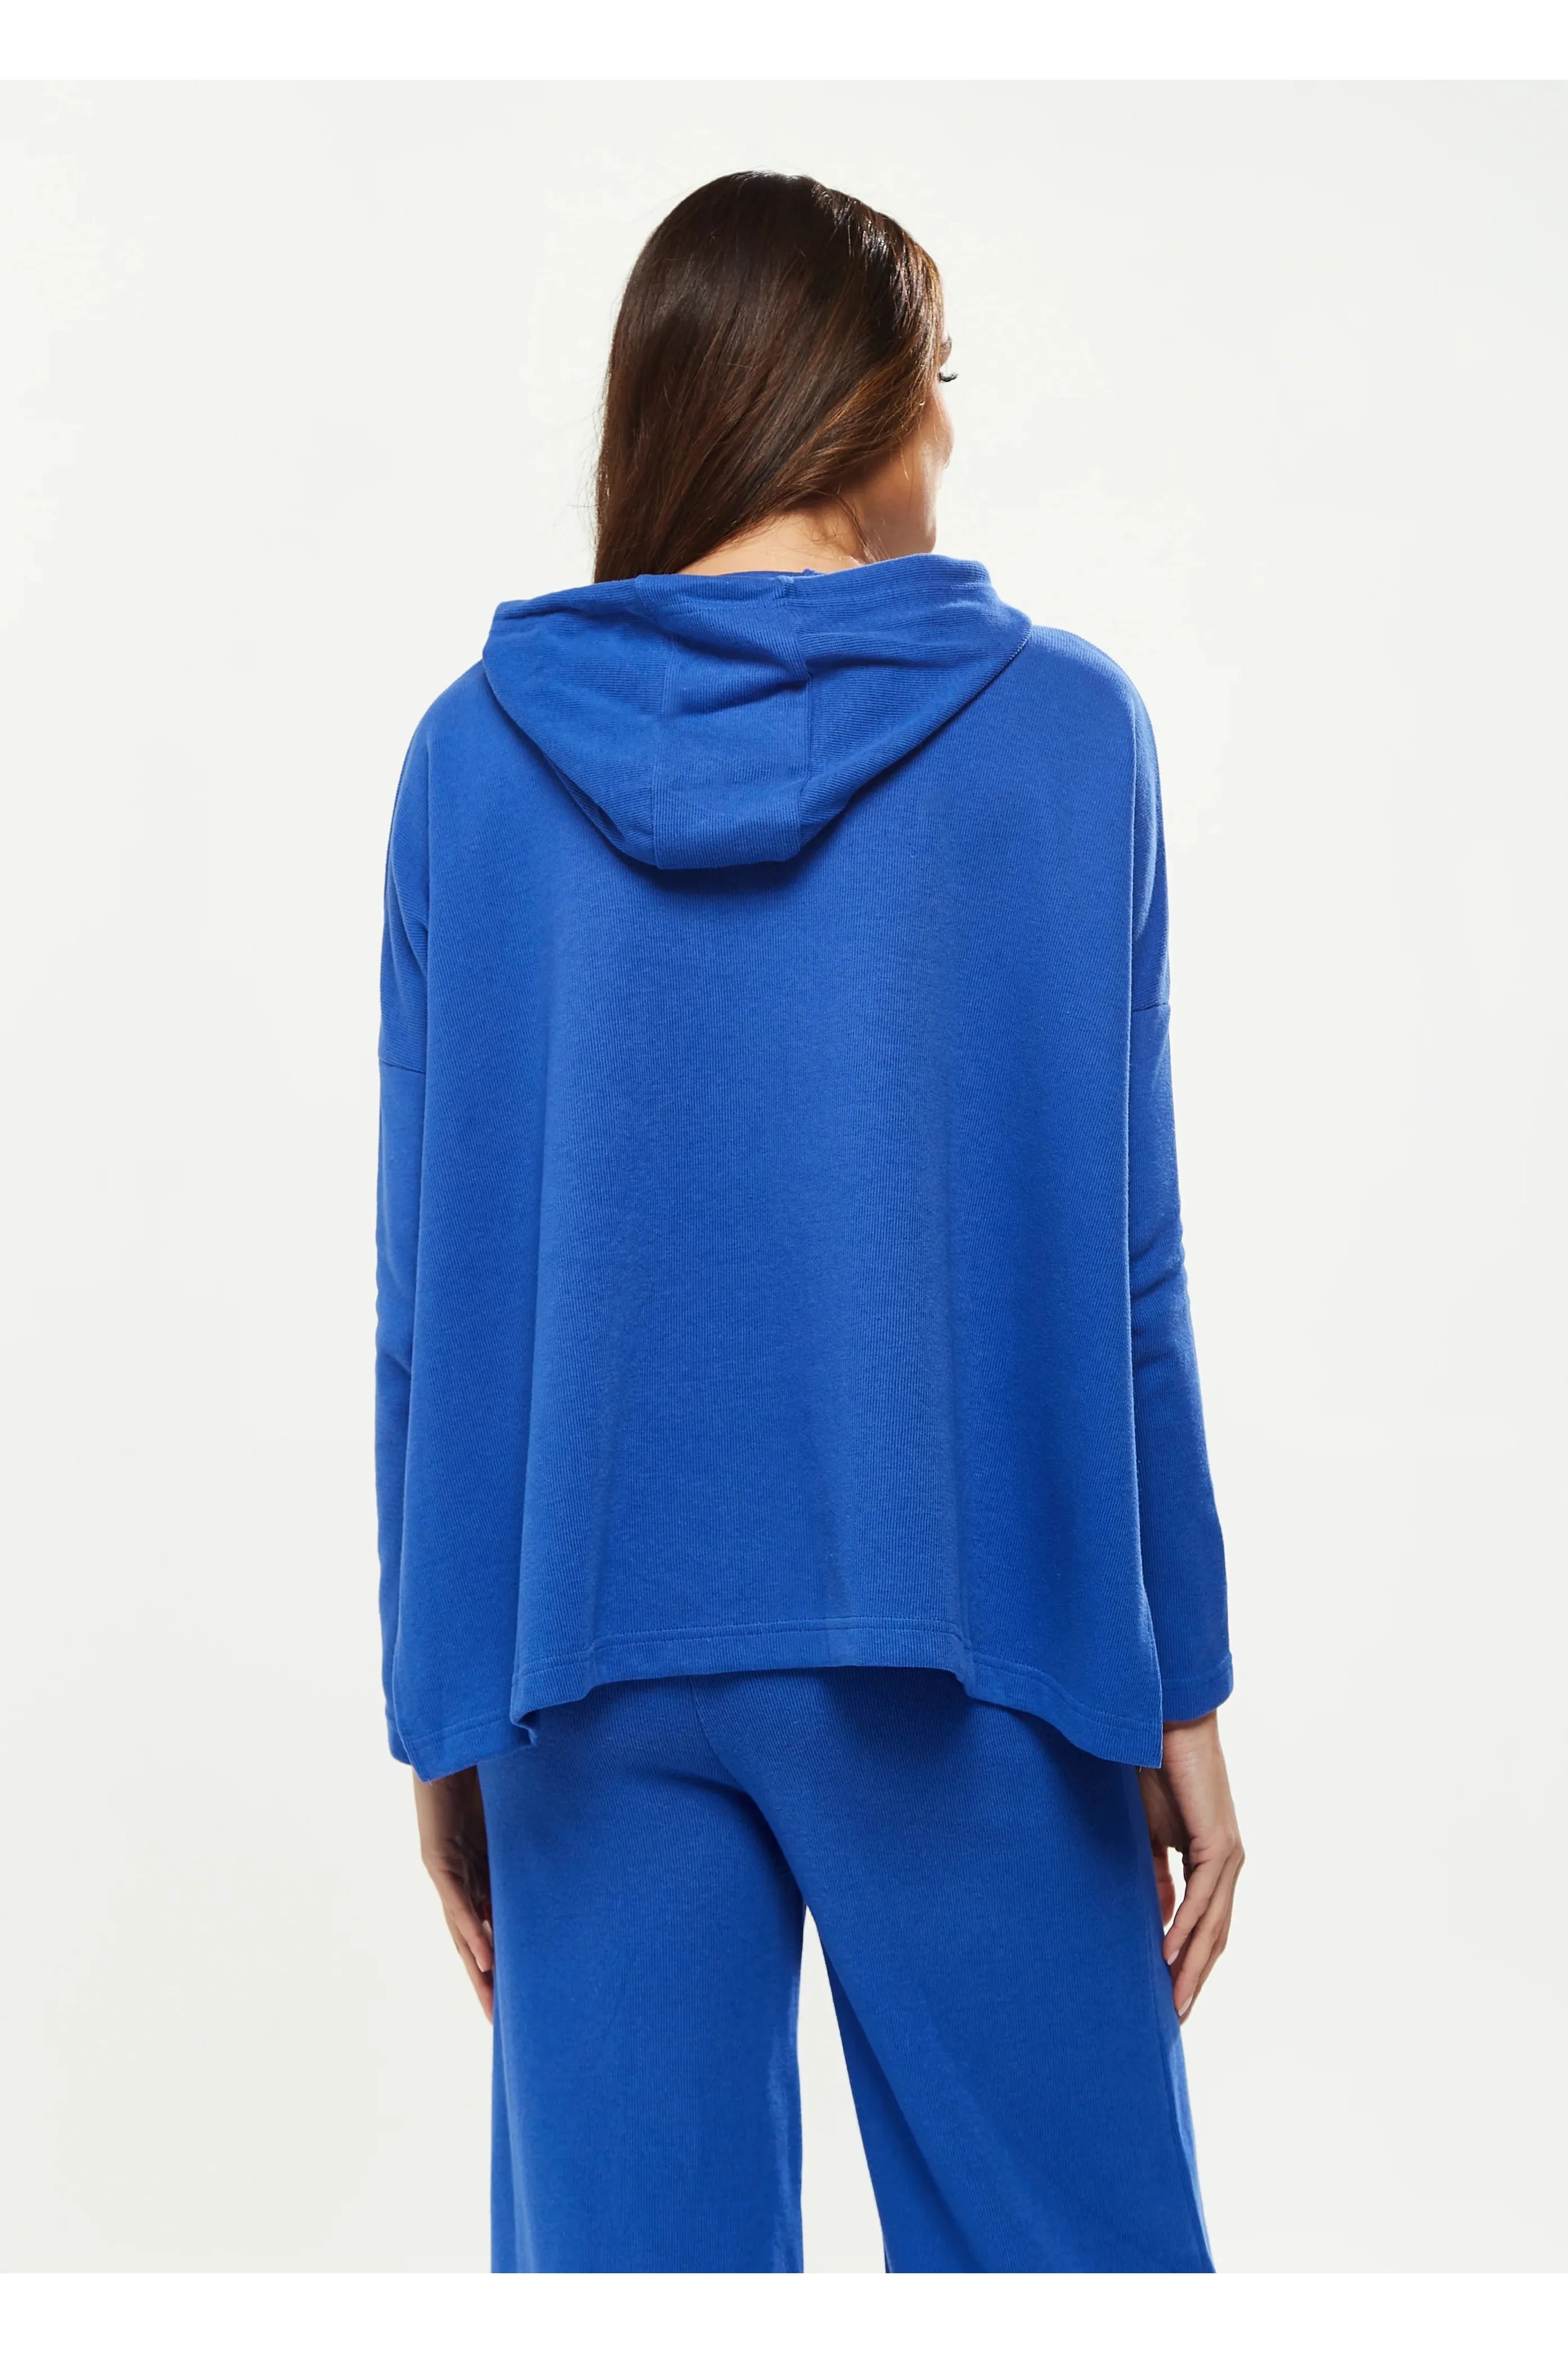 Hooded Sweatshirt With Front Pocket In Blue B15-LIQ21-169B